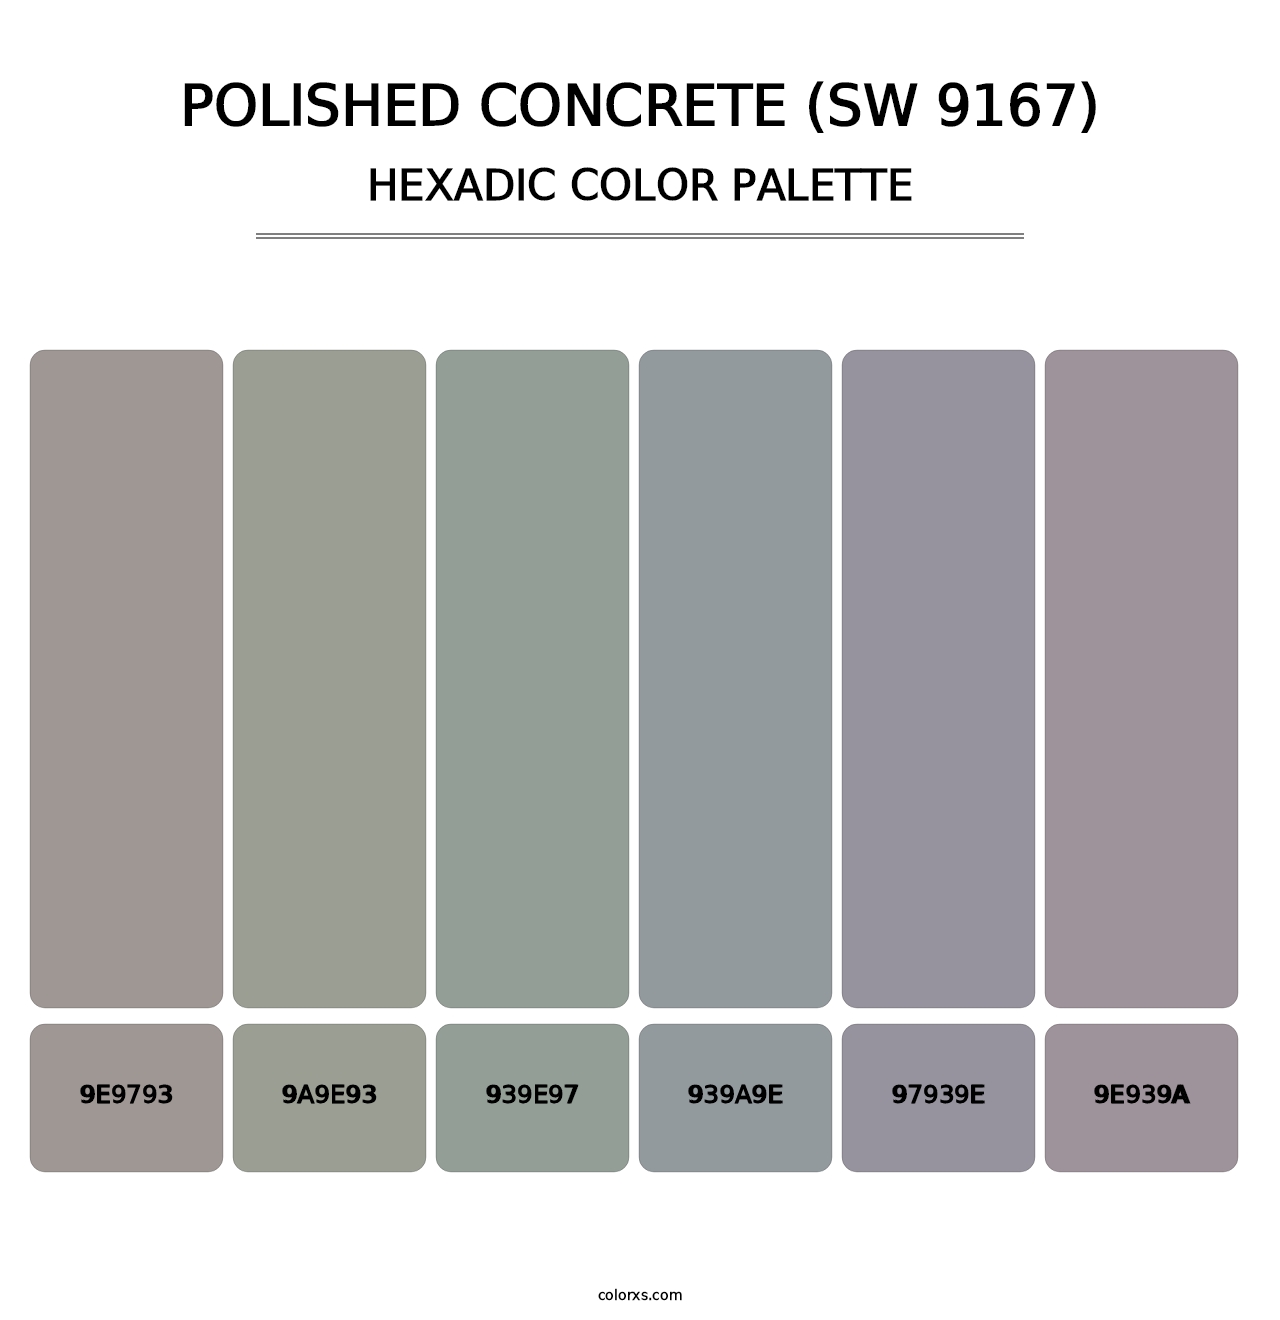 Polished Concrete (SW 9167) - Hexadic Color Palette